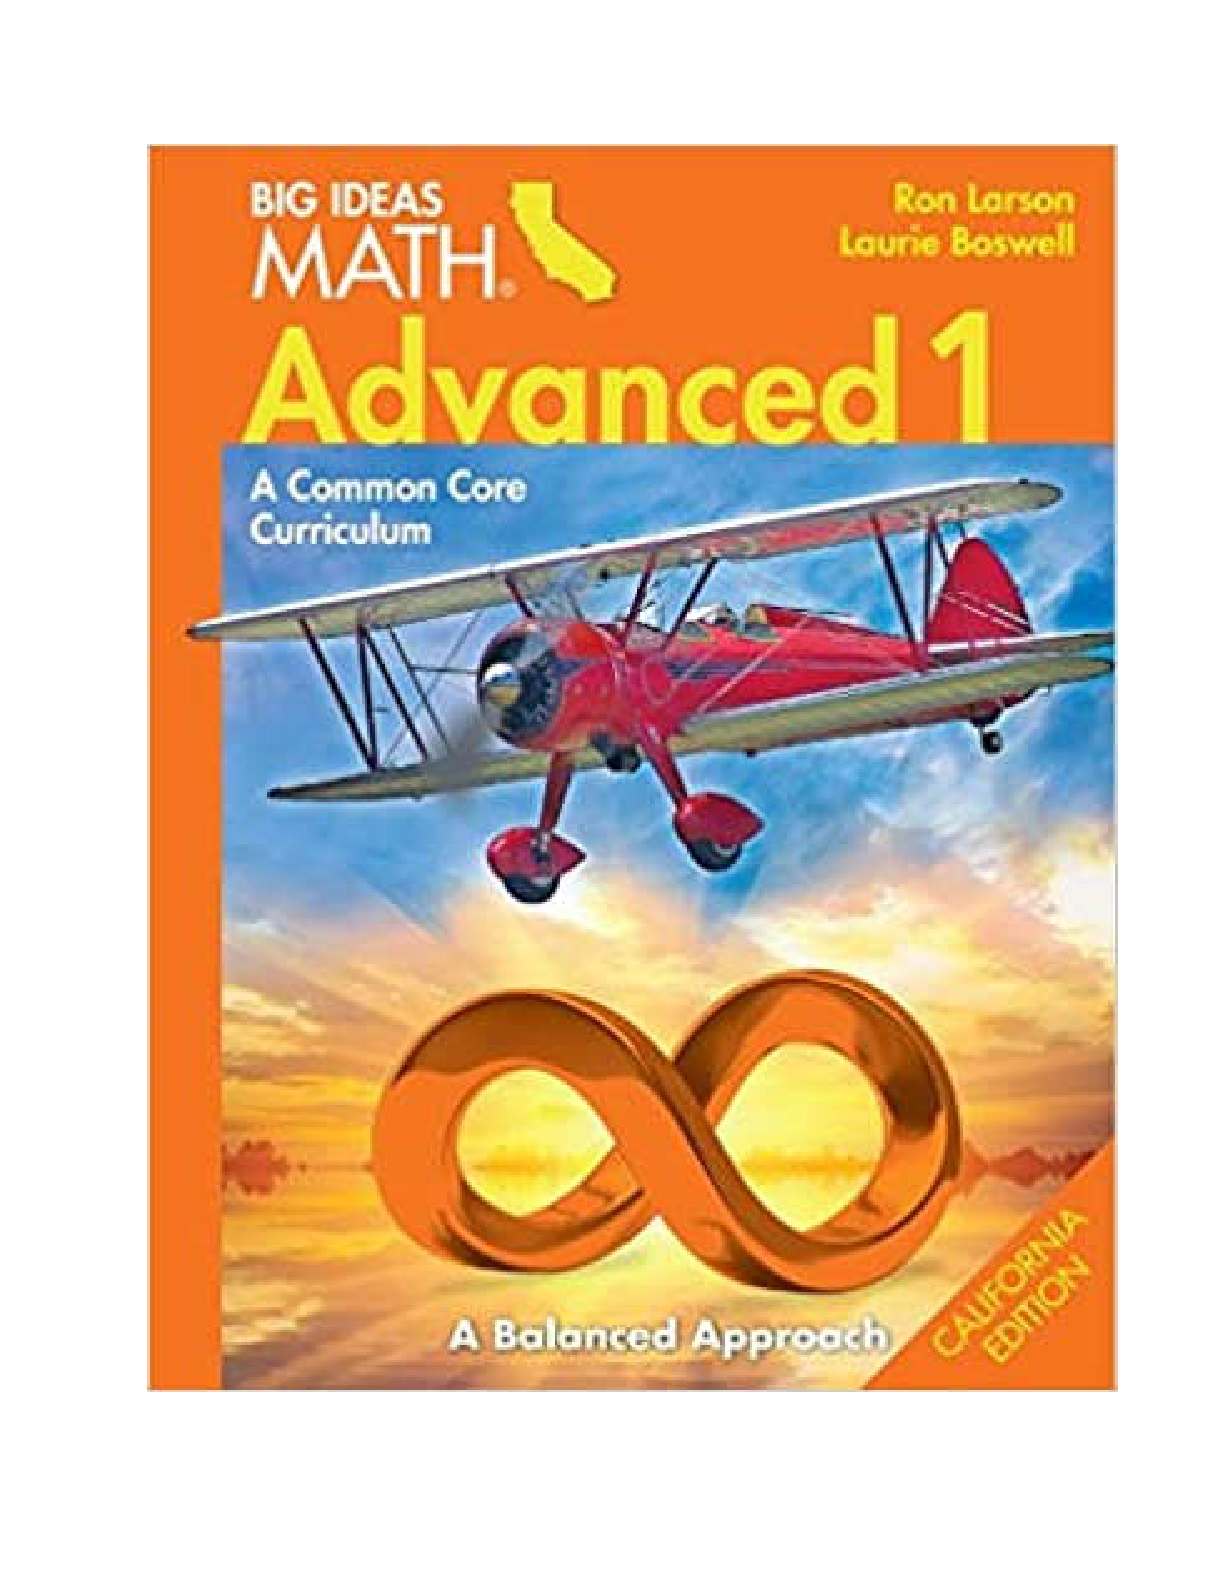 [eBook] [PDF] For Big Ideas Math Advanced 1 A Balanced Approach (California Edition) Ron Larson, Laurie Boswell 